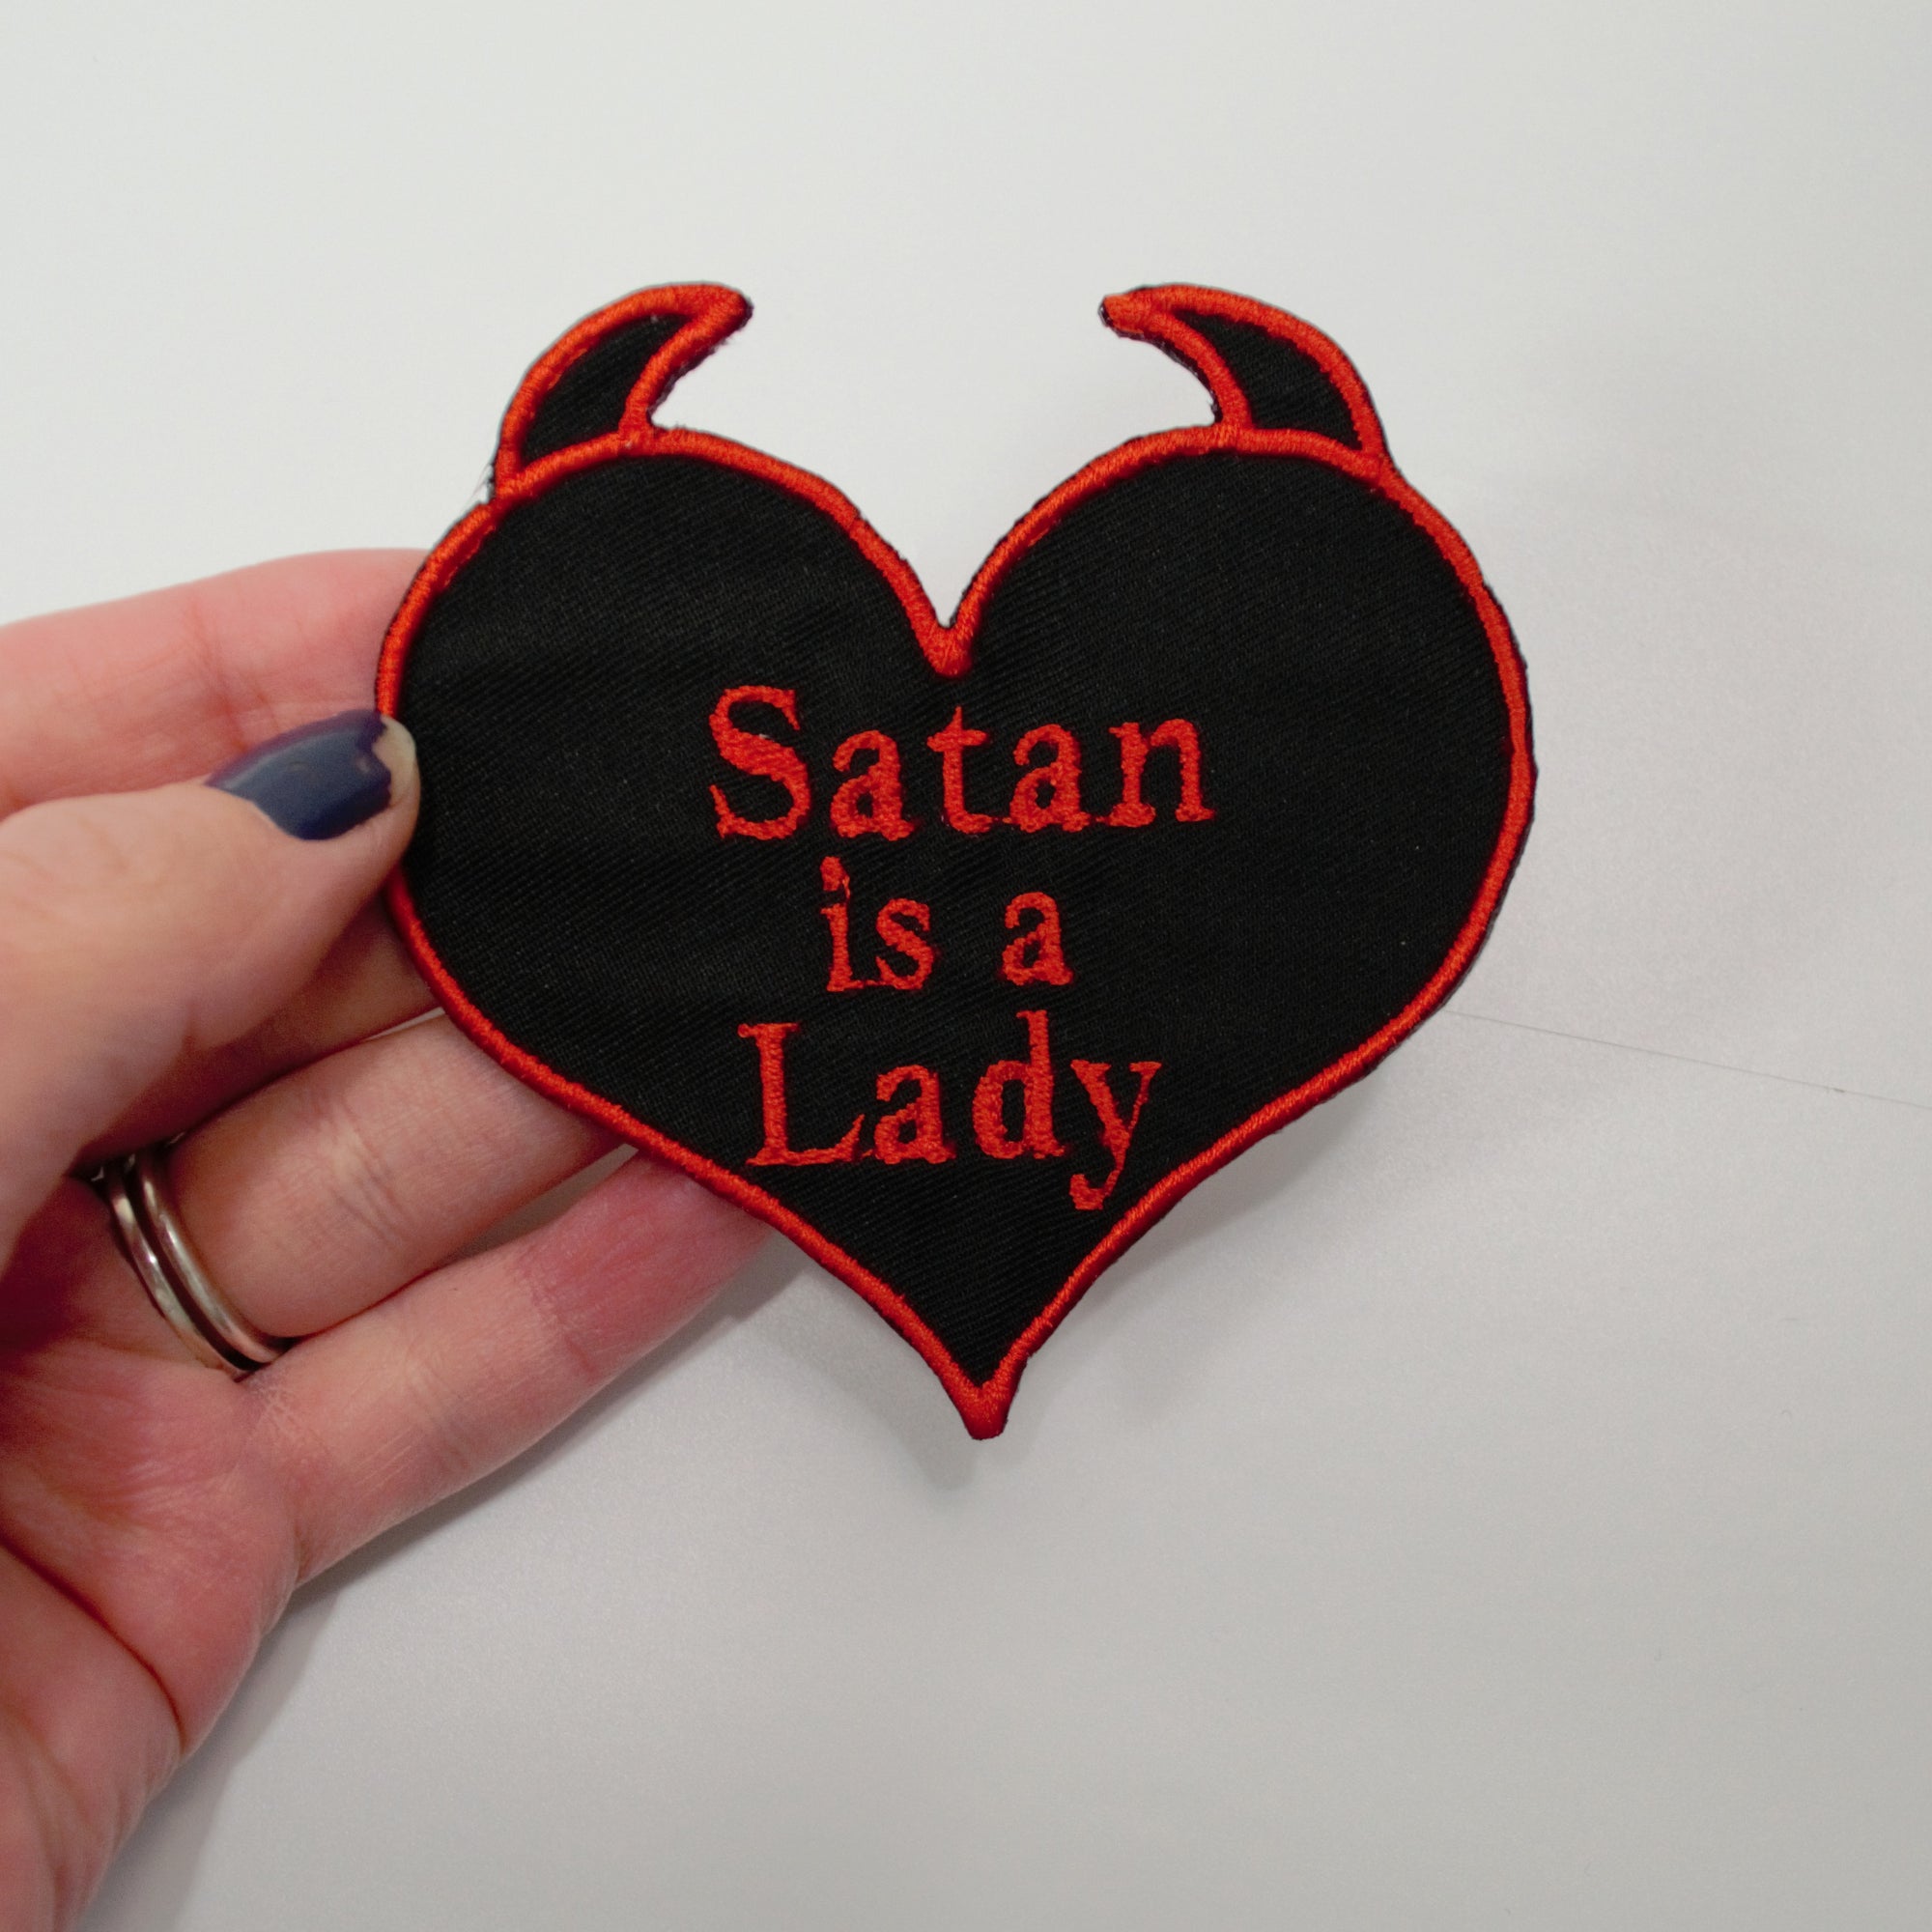 satan is a lady patch